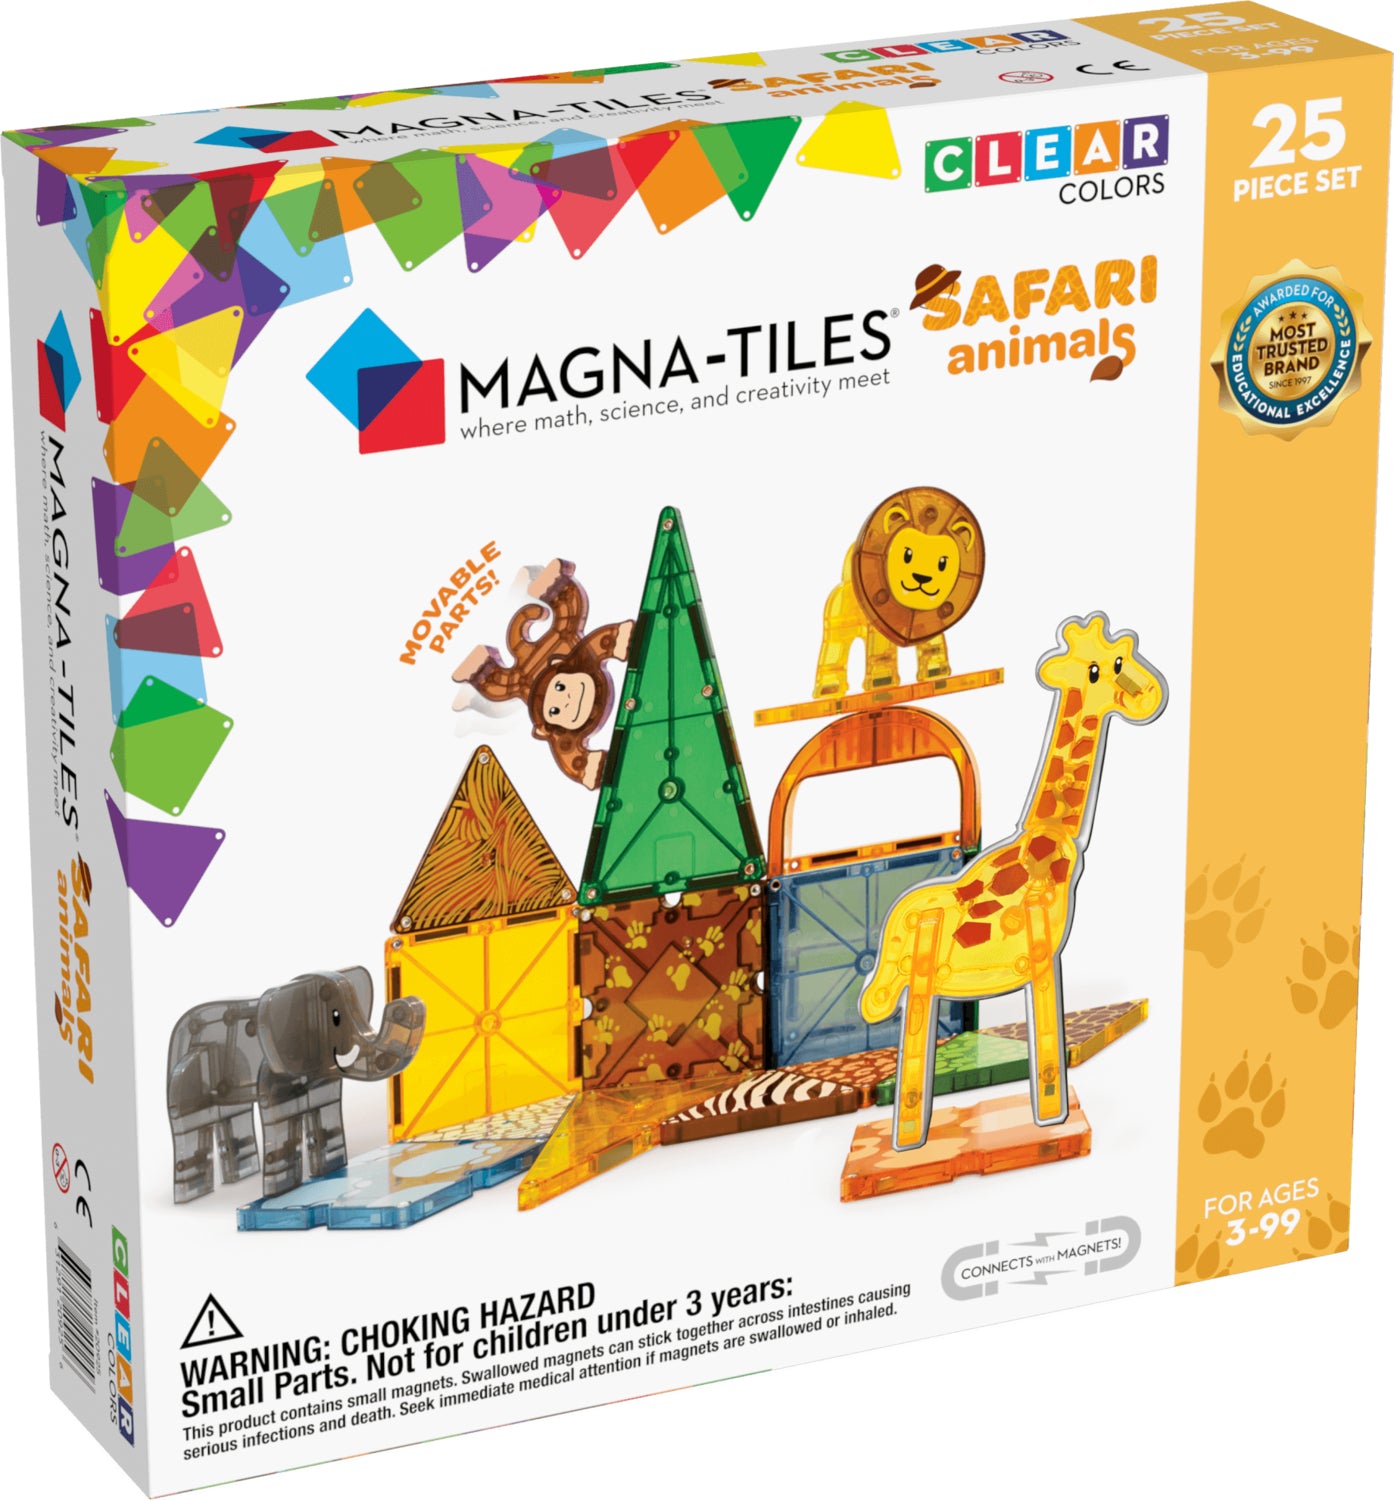 MAGNA-TILES® Metropolis 110-Piece Magnetic Construction Set with FREE Storage  Bin